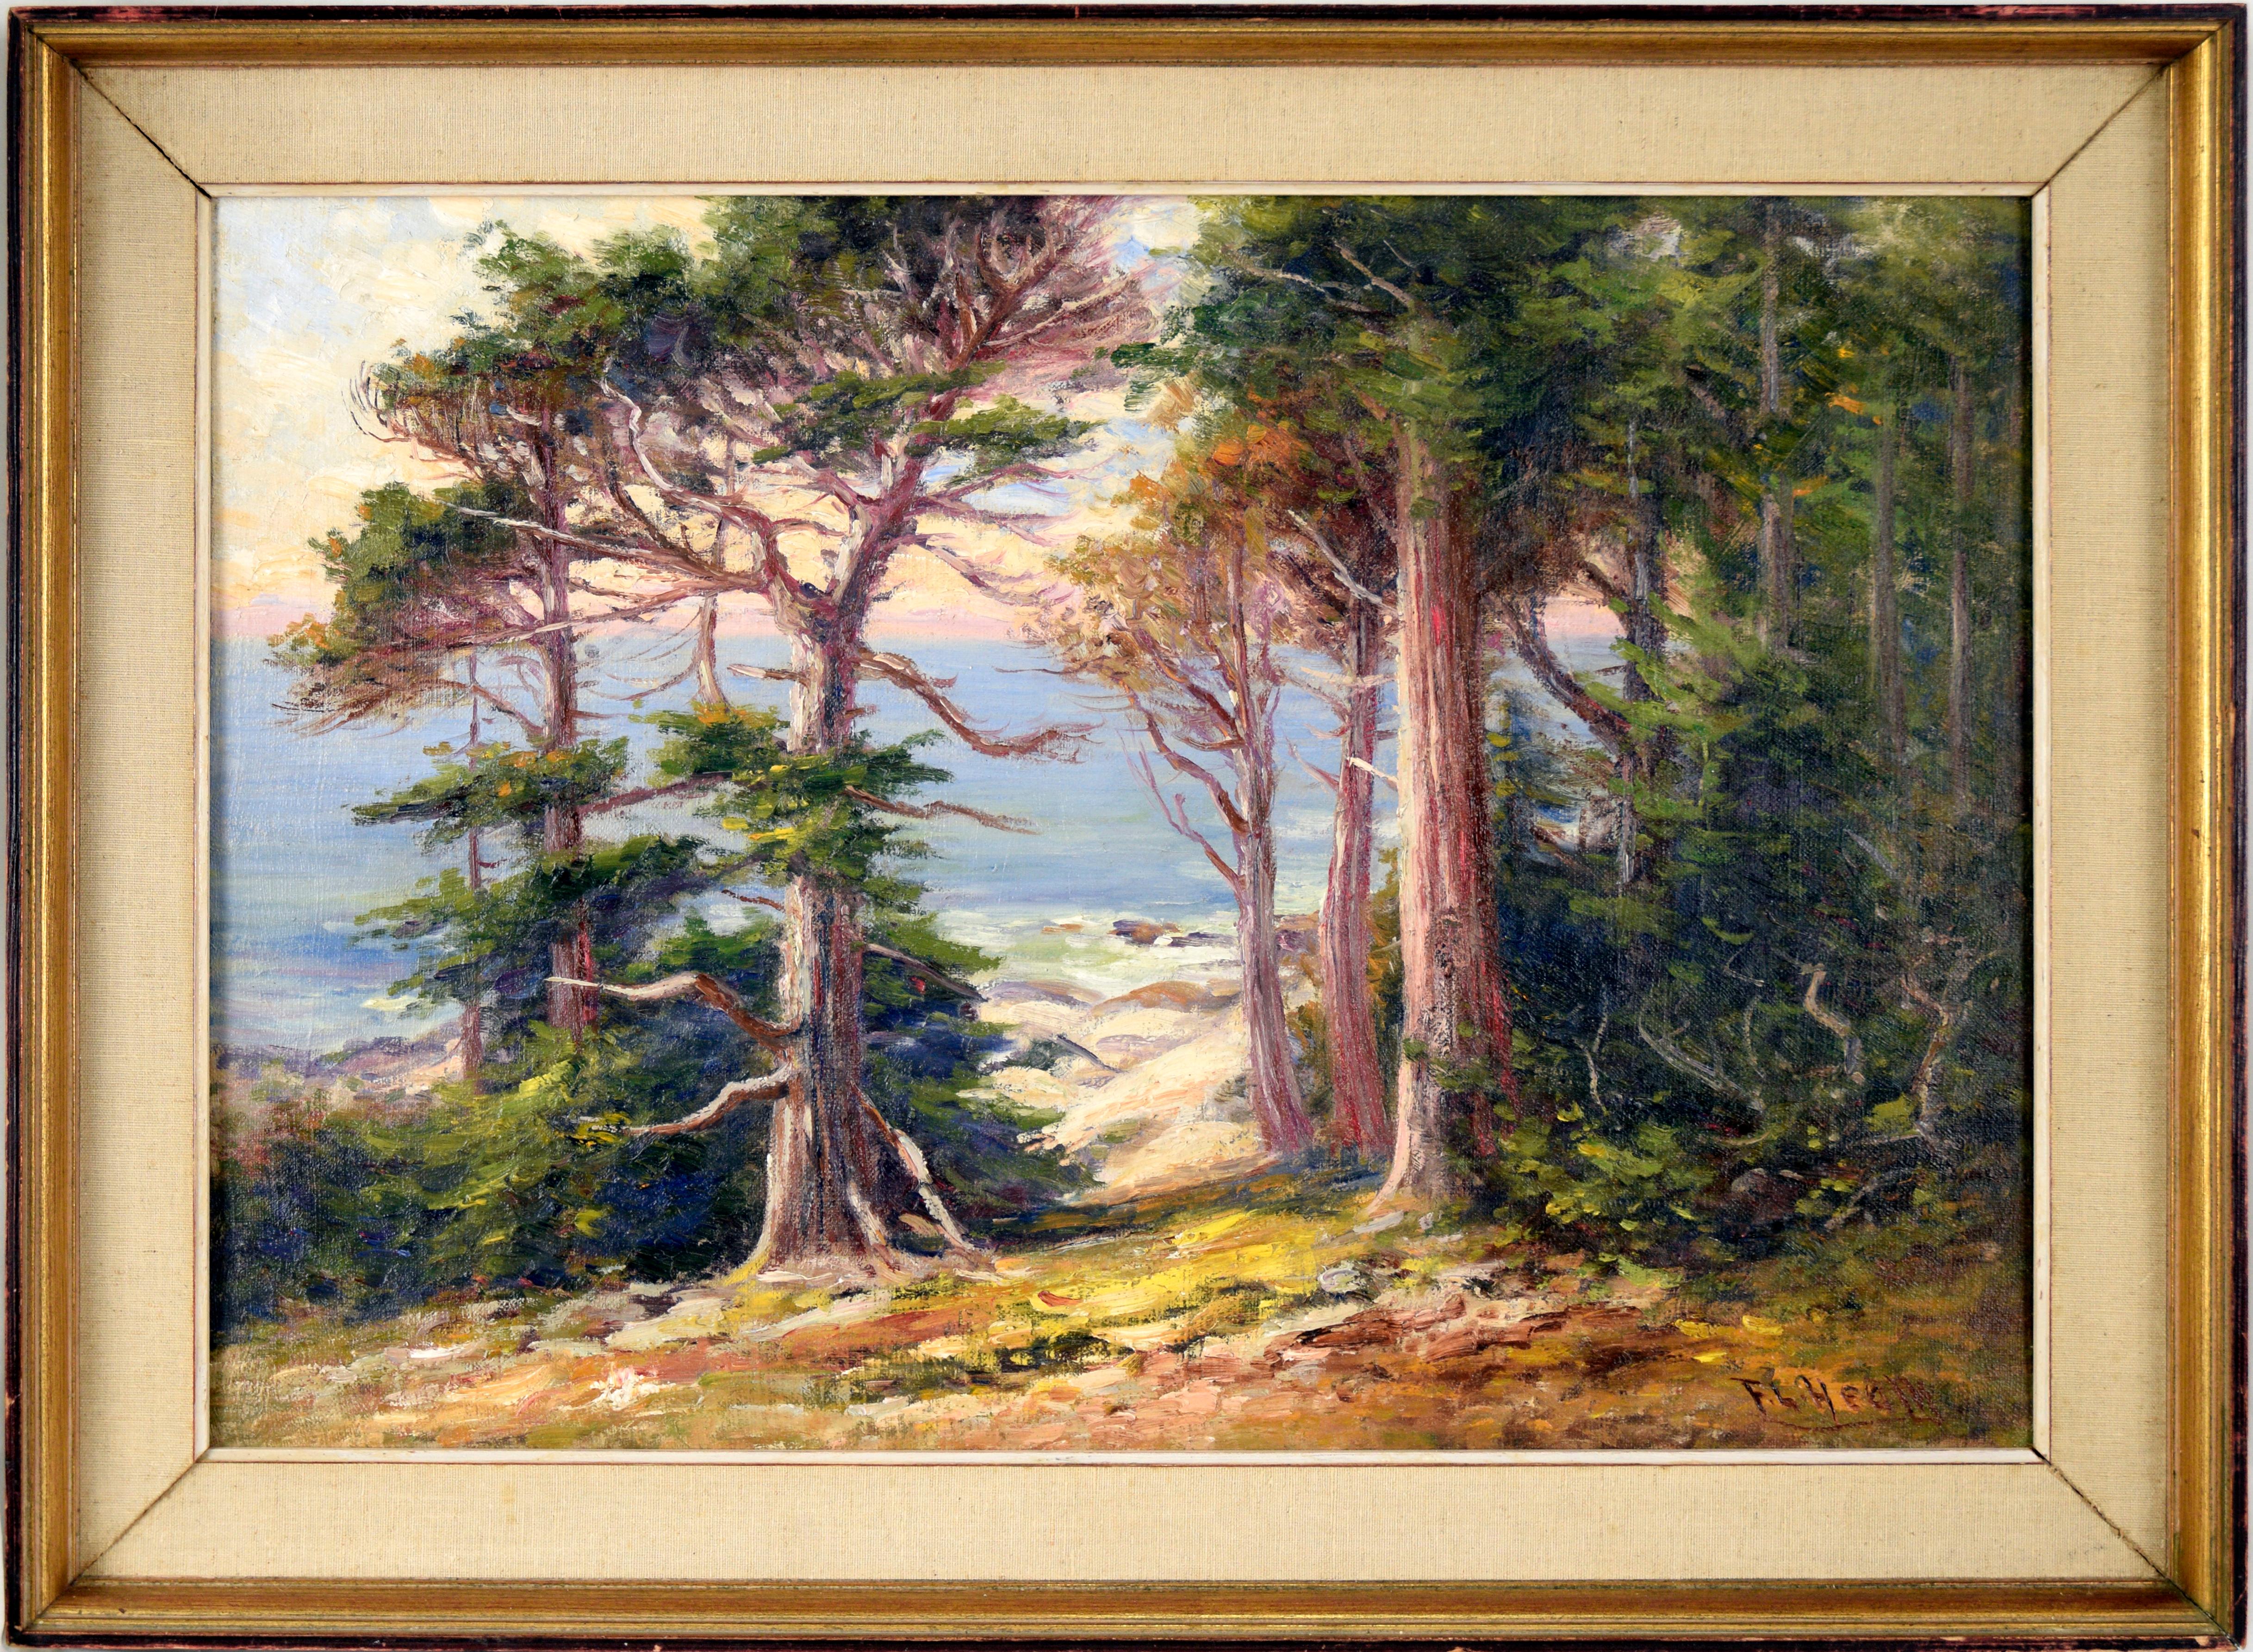 Frank Lucien Heath Landscape Painting - Old 17 Mile Drive, Carmel California Landscape Early 1900s Oil on Linen